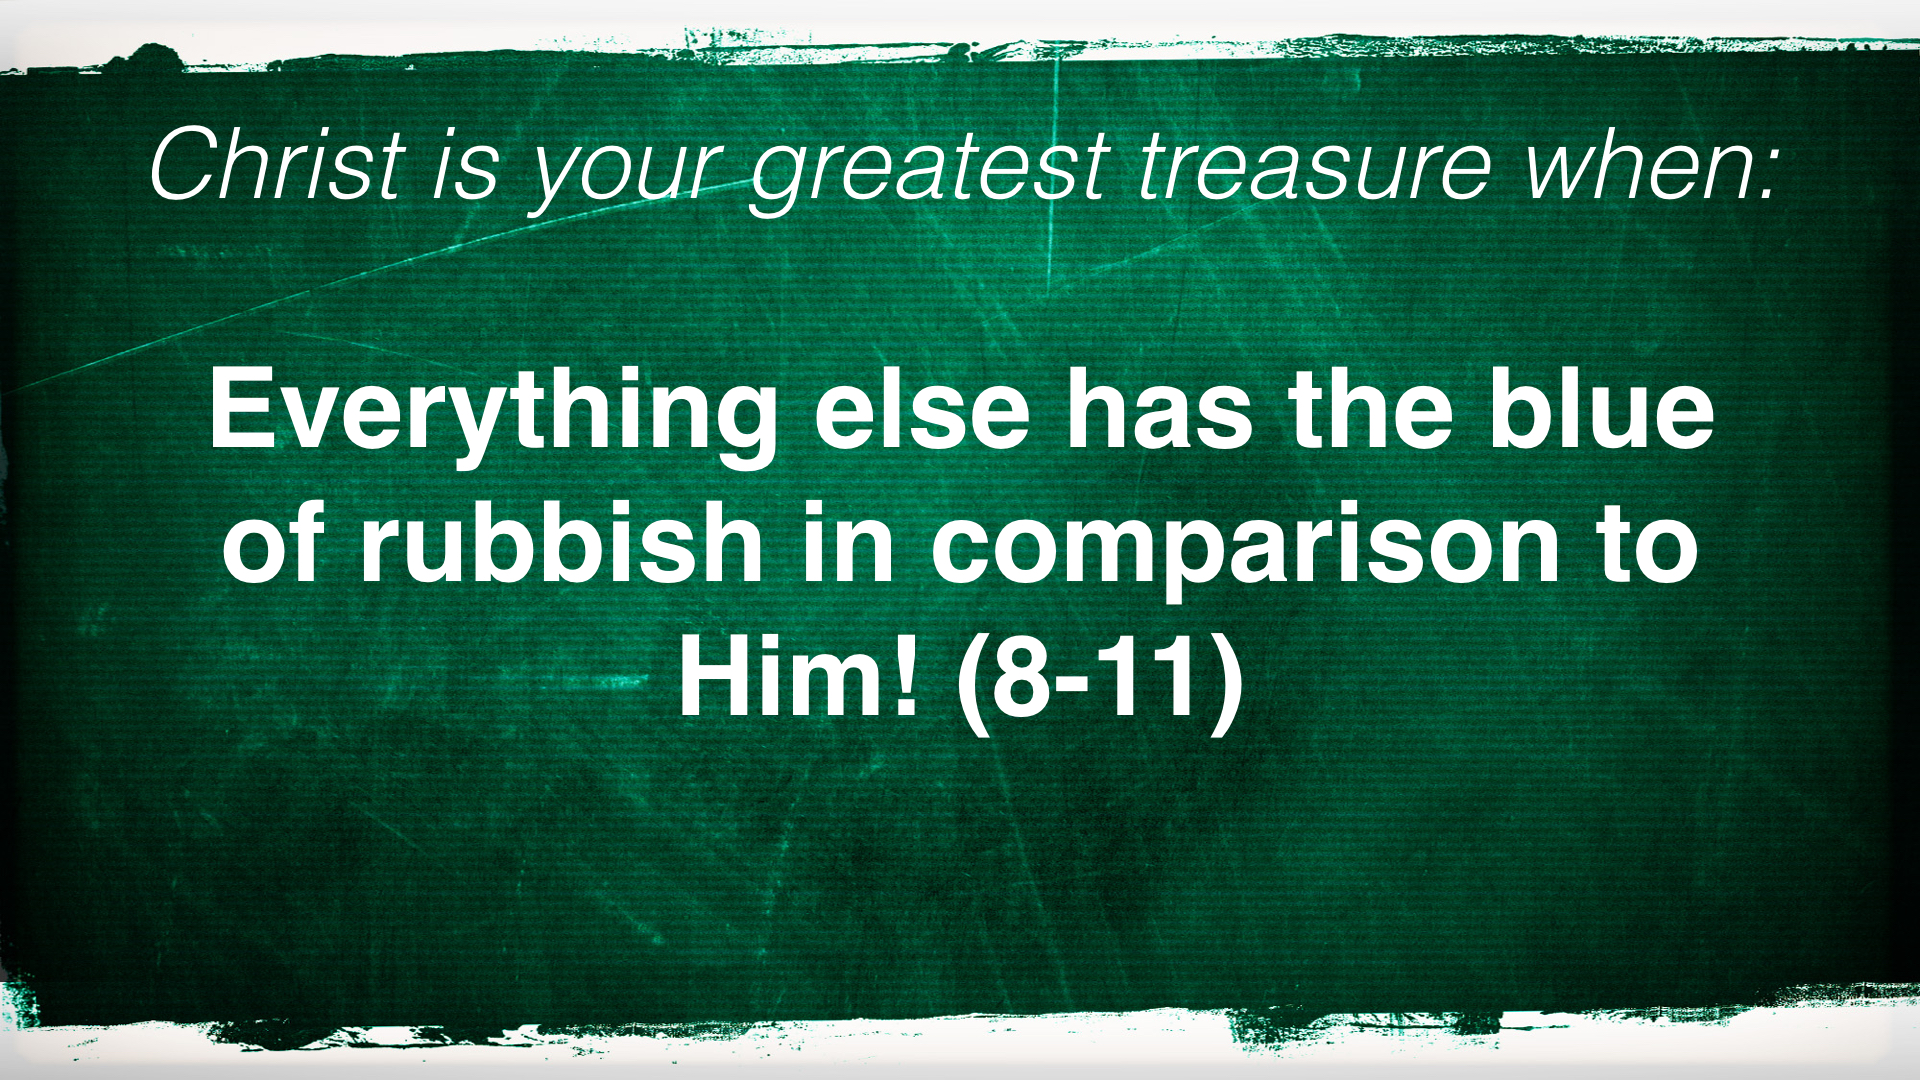 christ-your-greatest-treasure-003